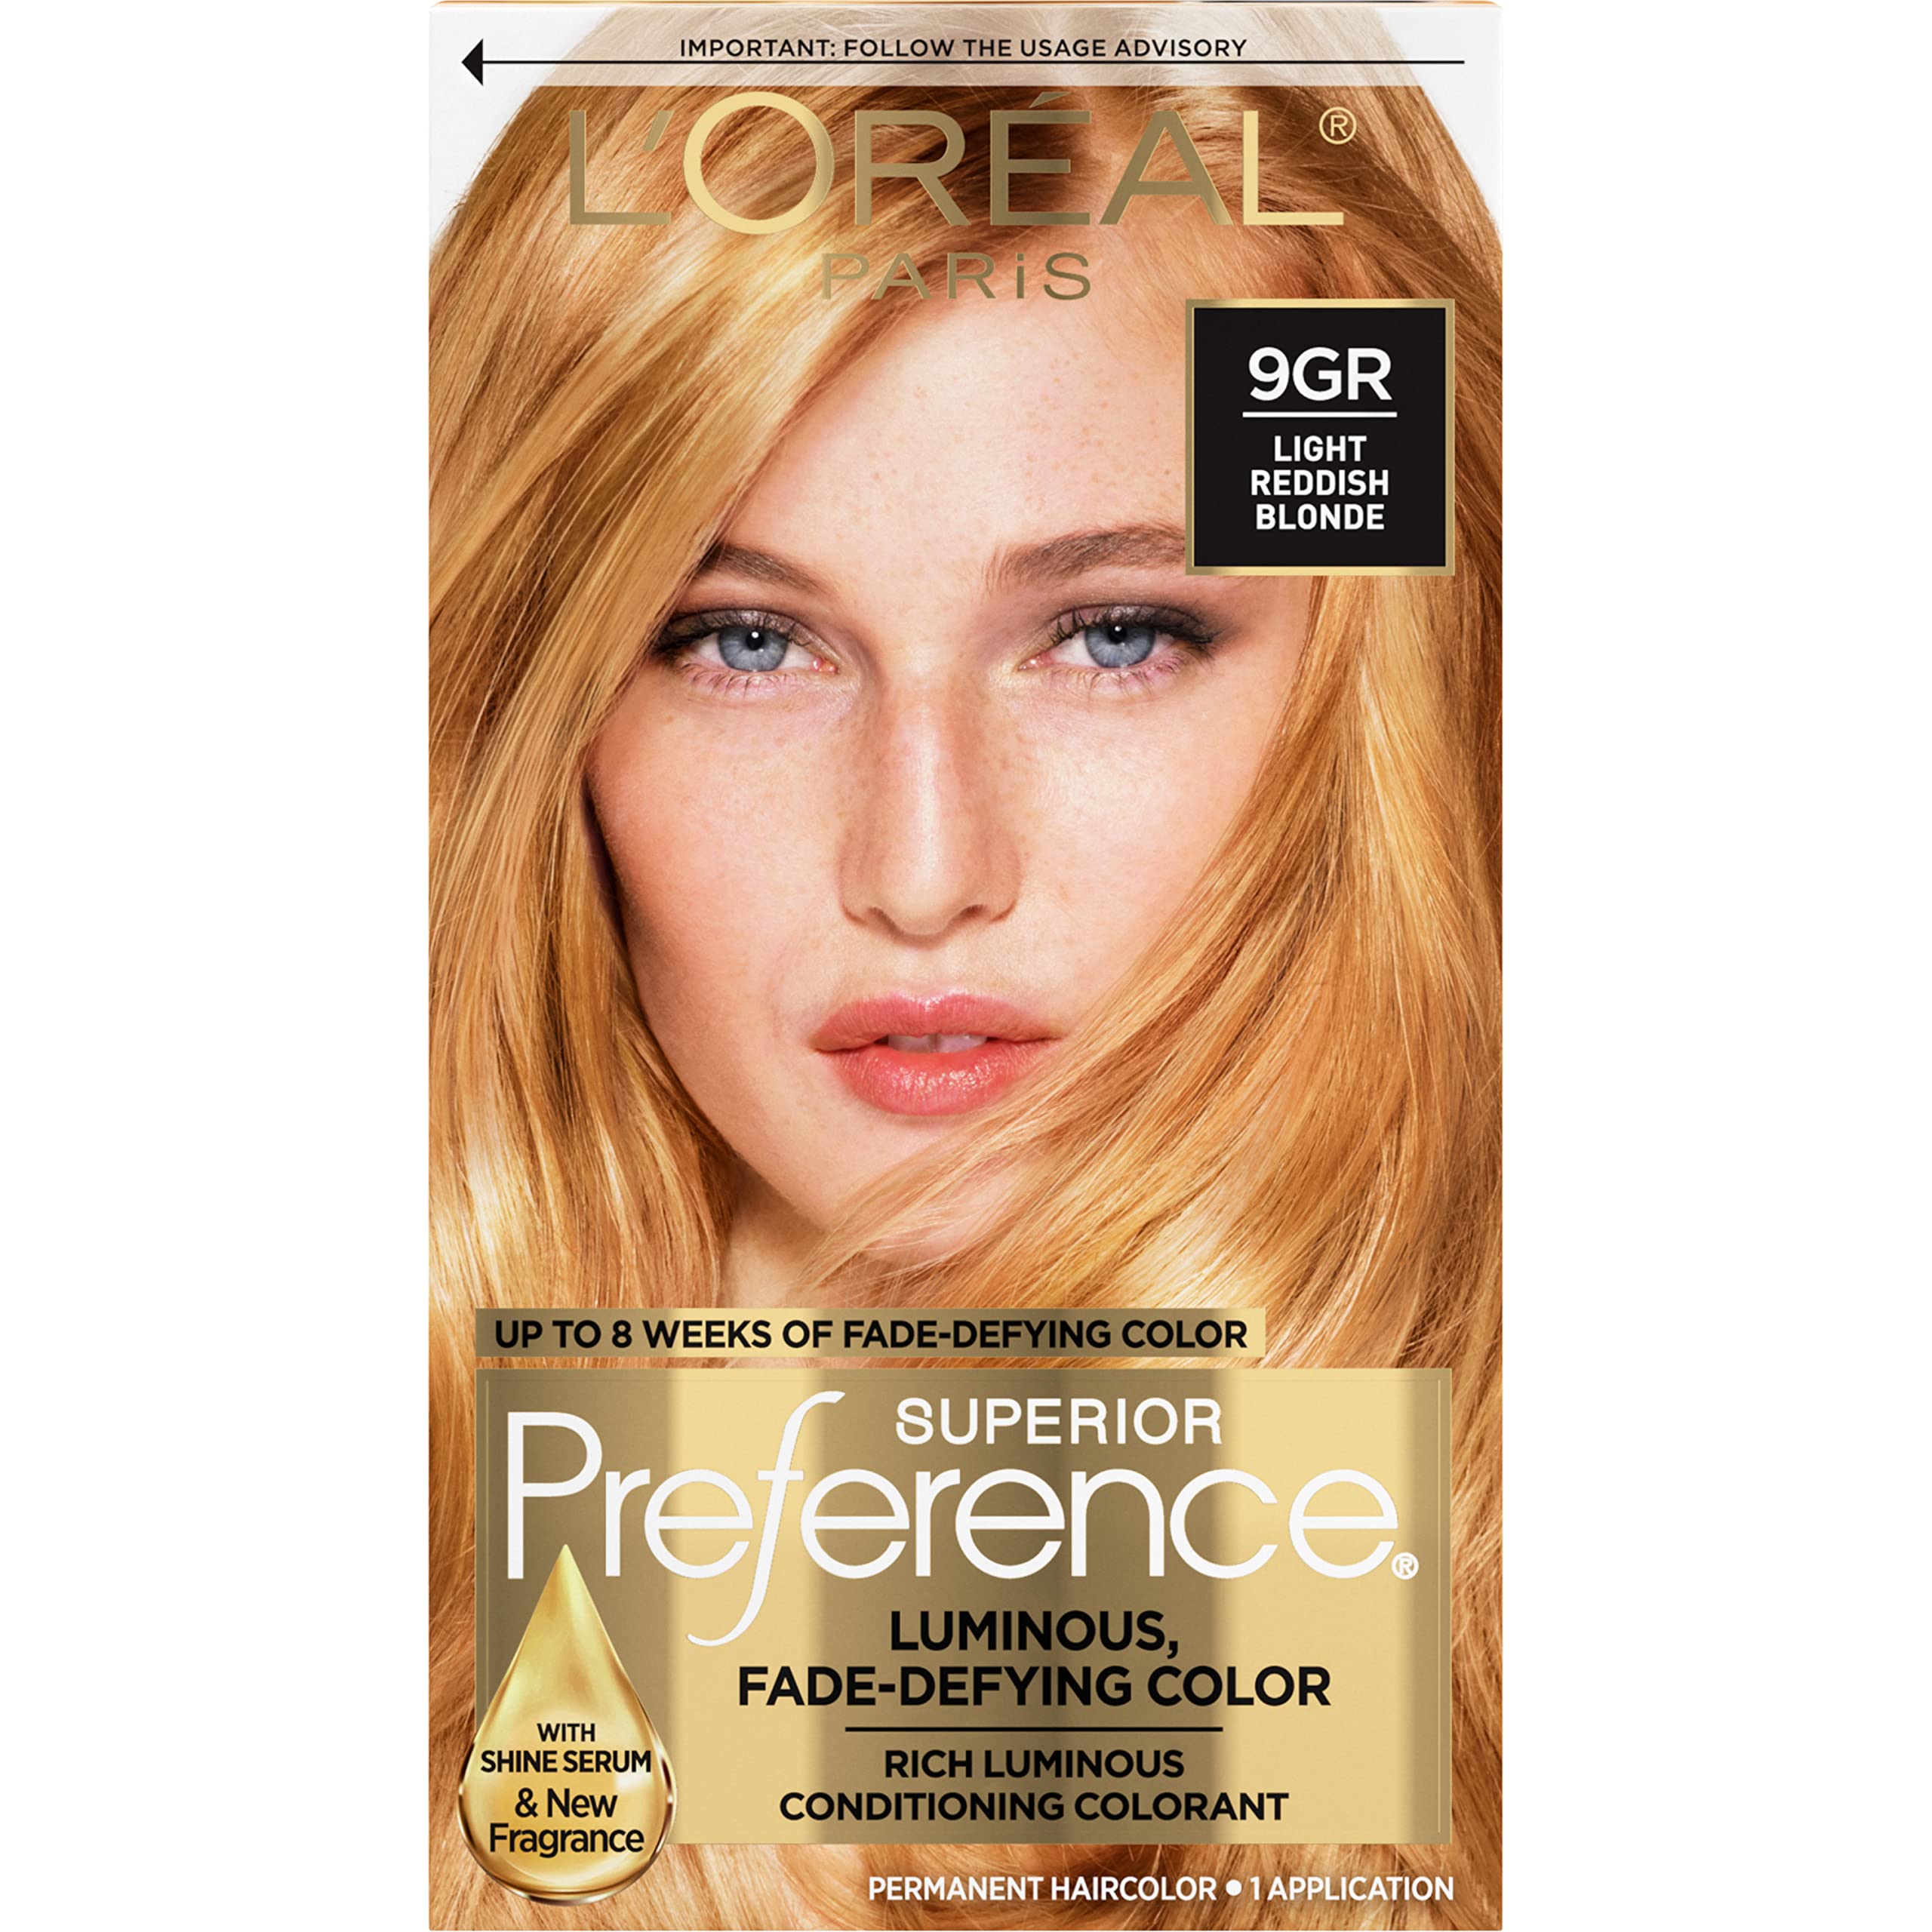 L'Oreal Paris Superior Preference Fade-Defying + Shine Permanent Hair Color, 9GR Light Golden Reddish Blonde, Pack of 1, Hair Dye